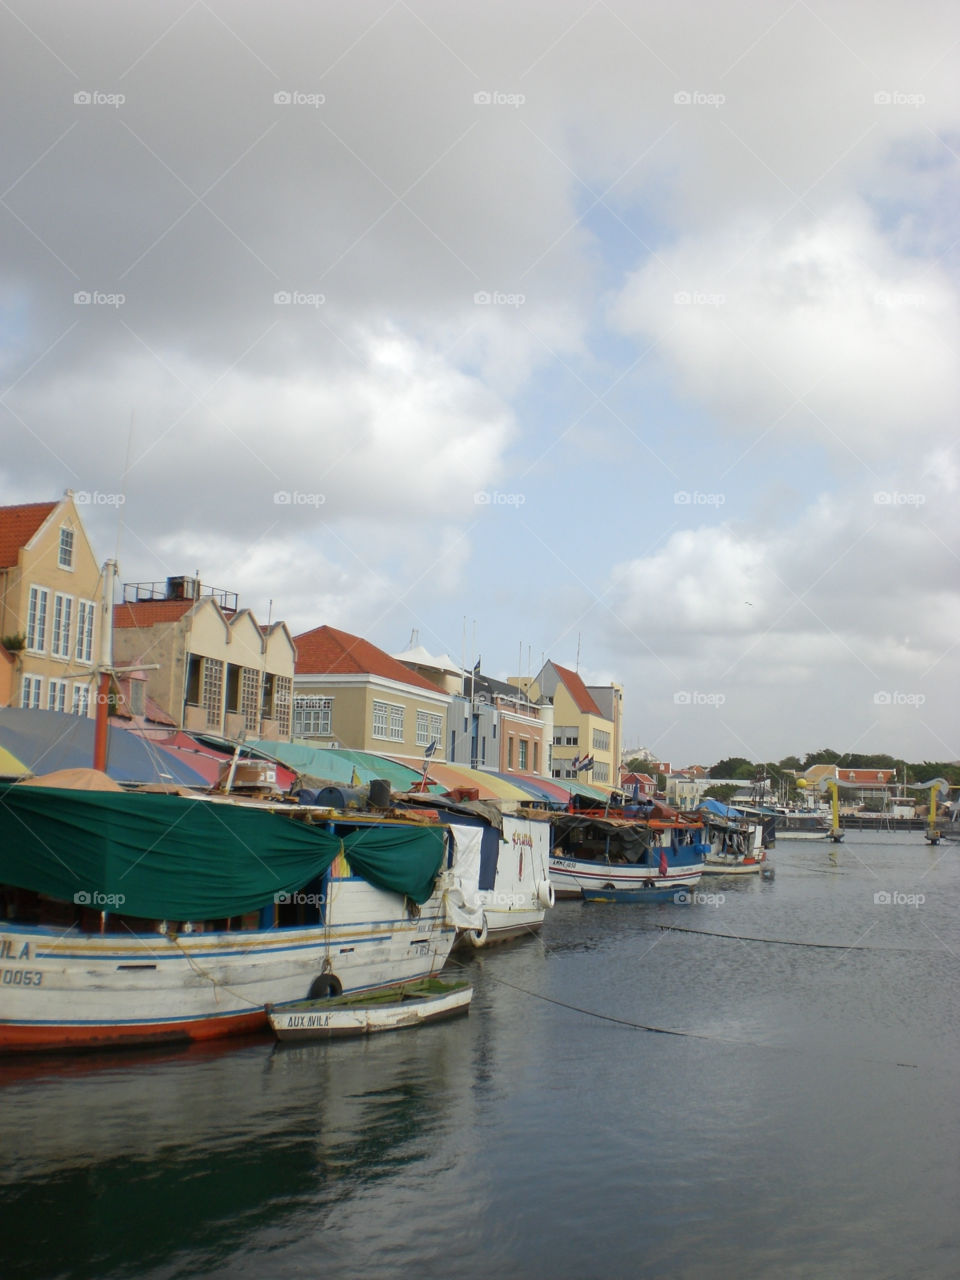 boat market curaçao island by trvldeb07